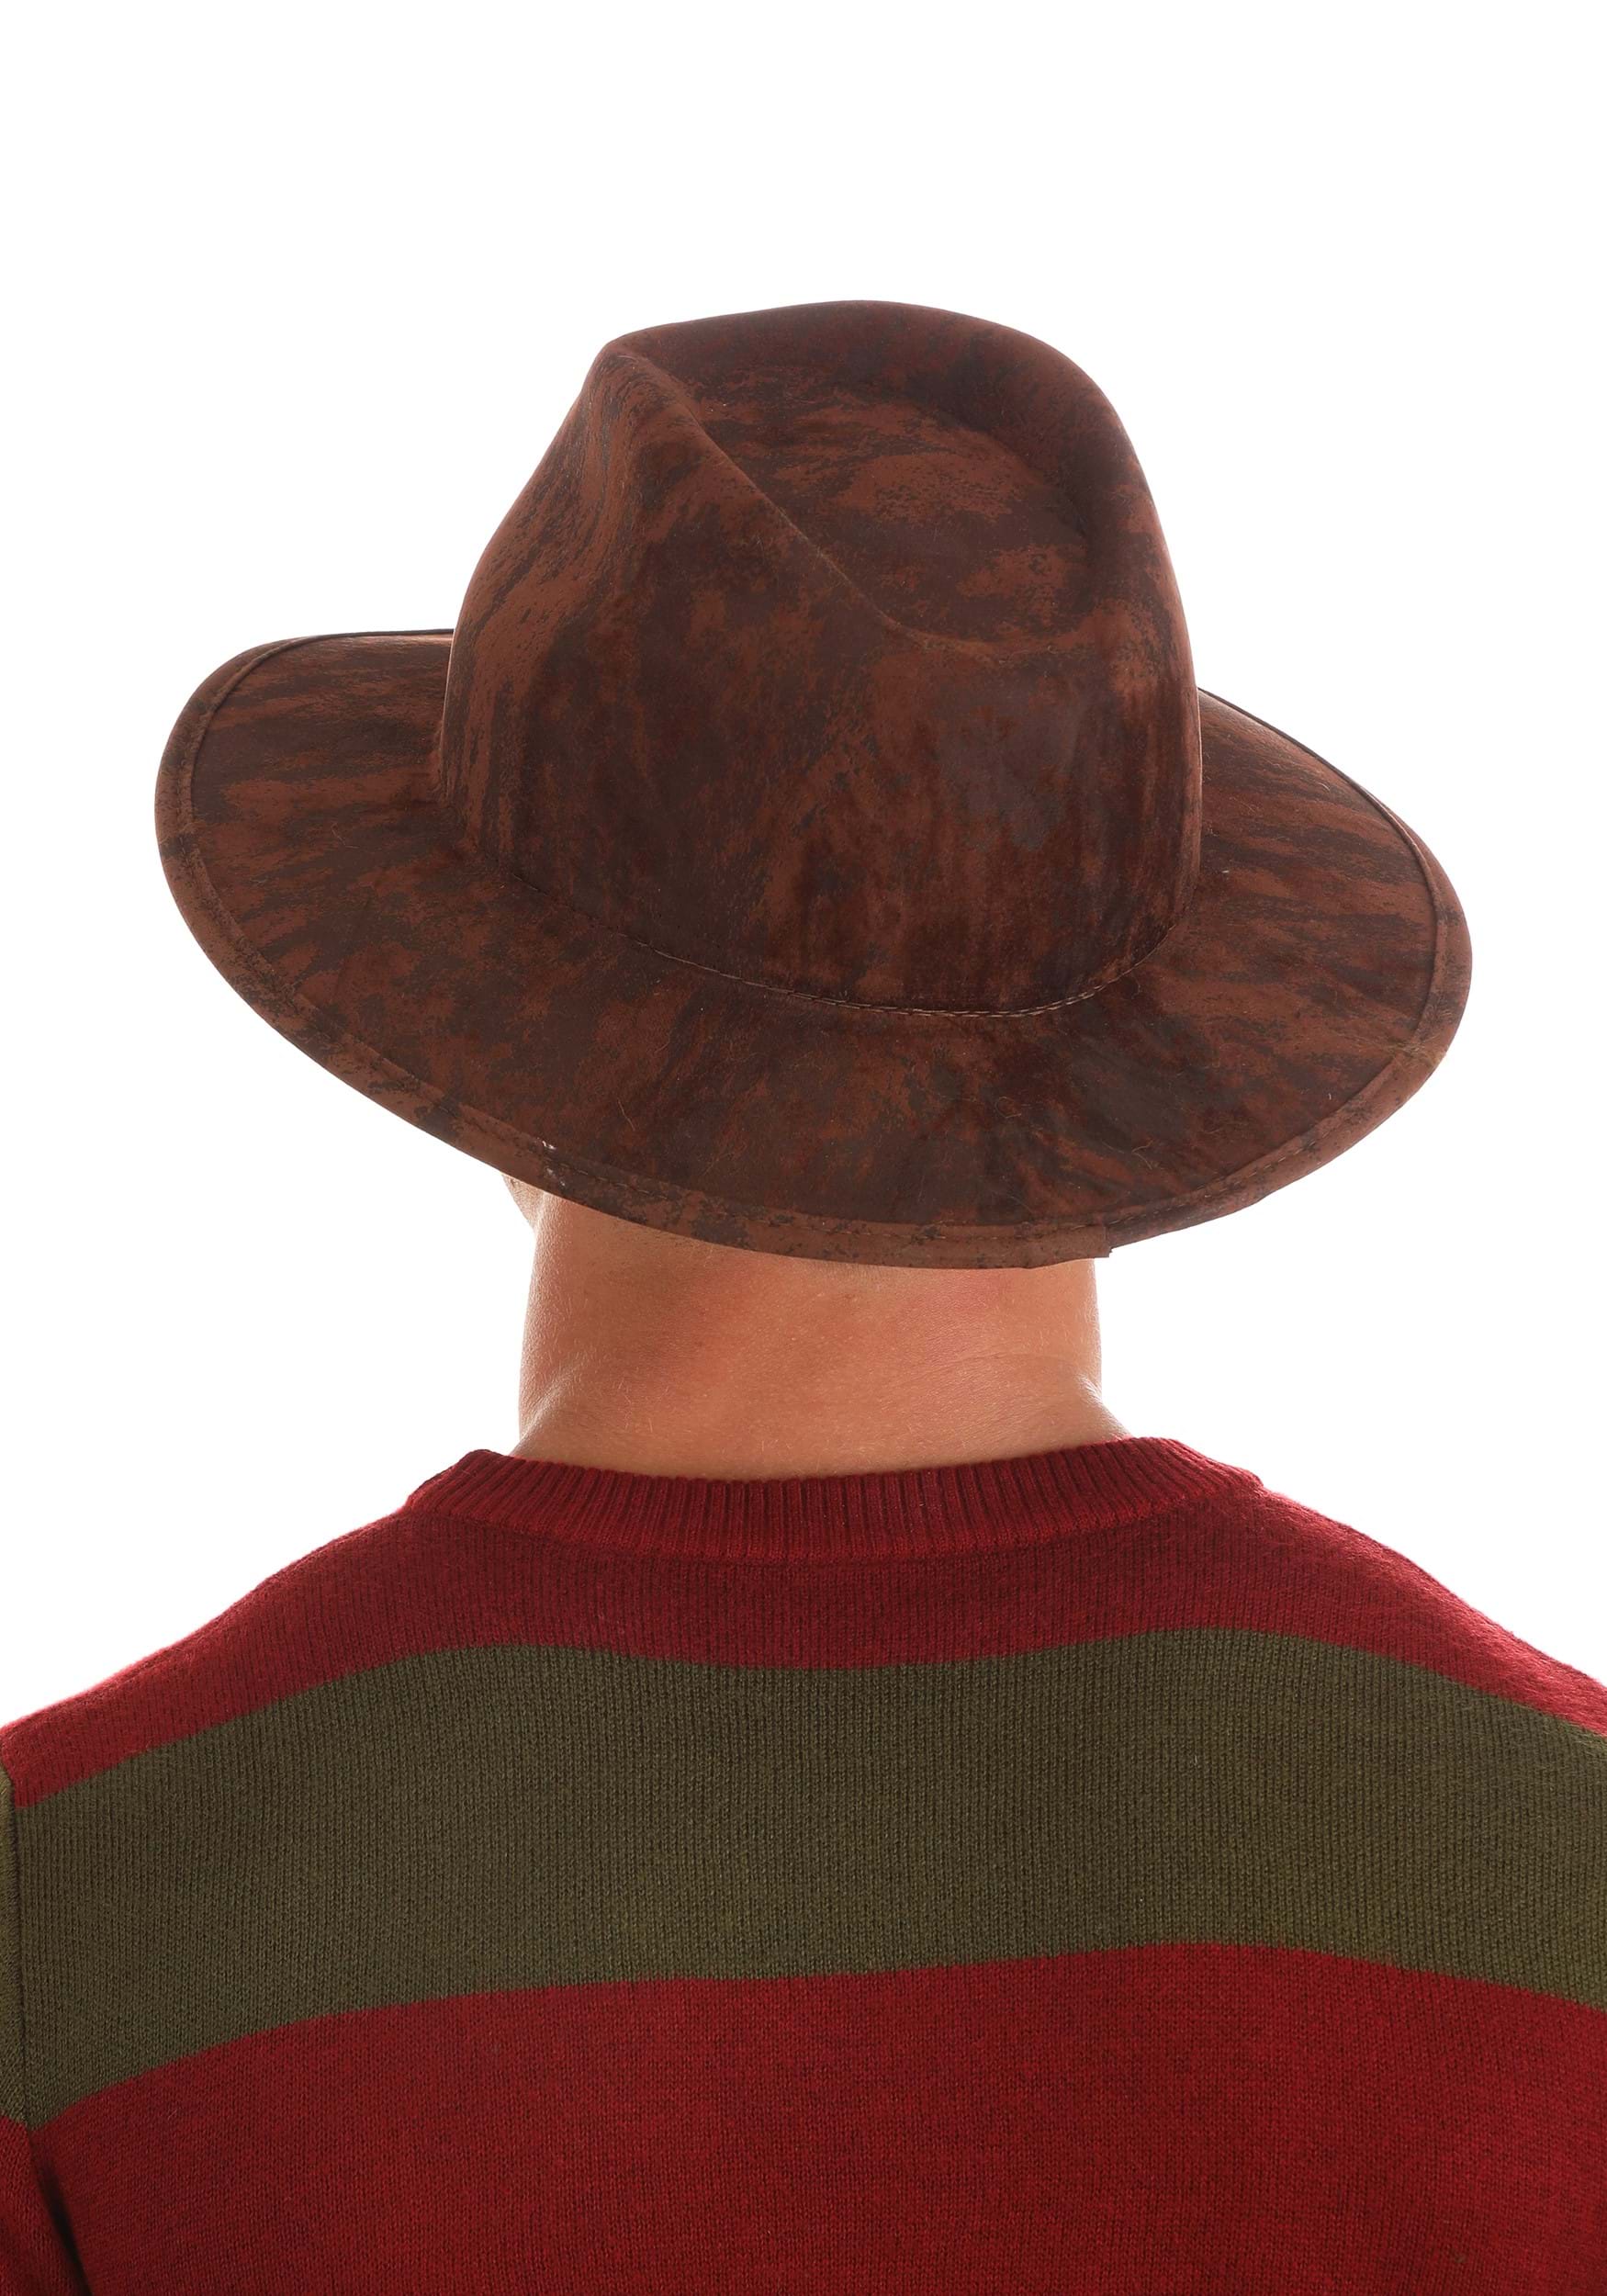 Dead Guy Cowboy Hat